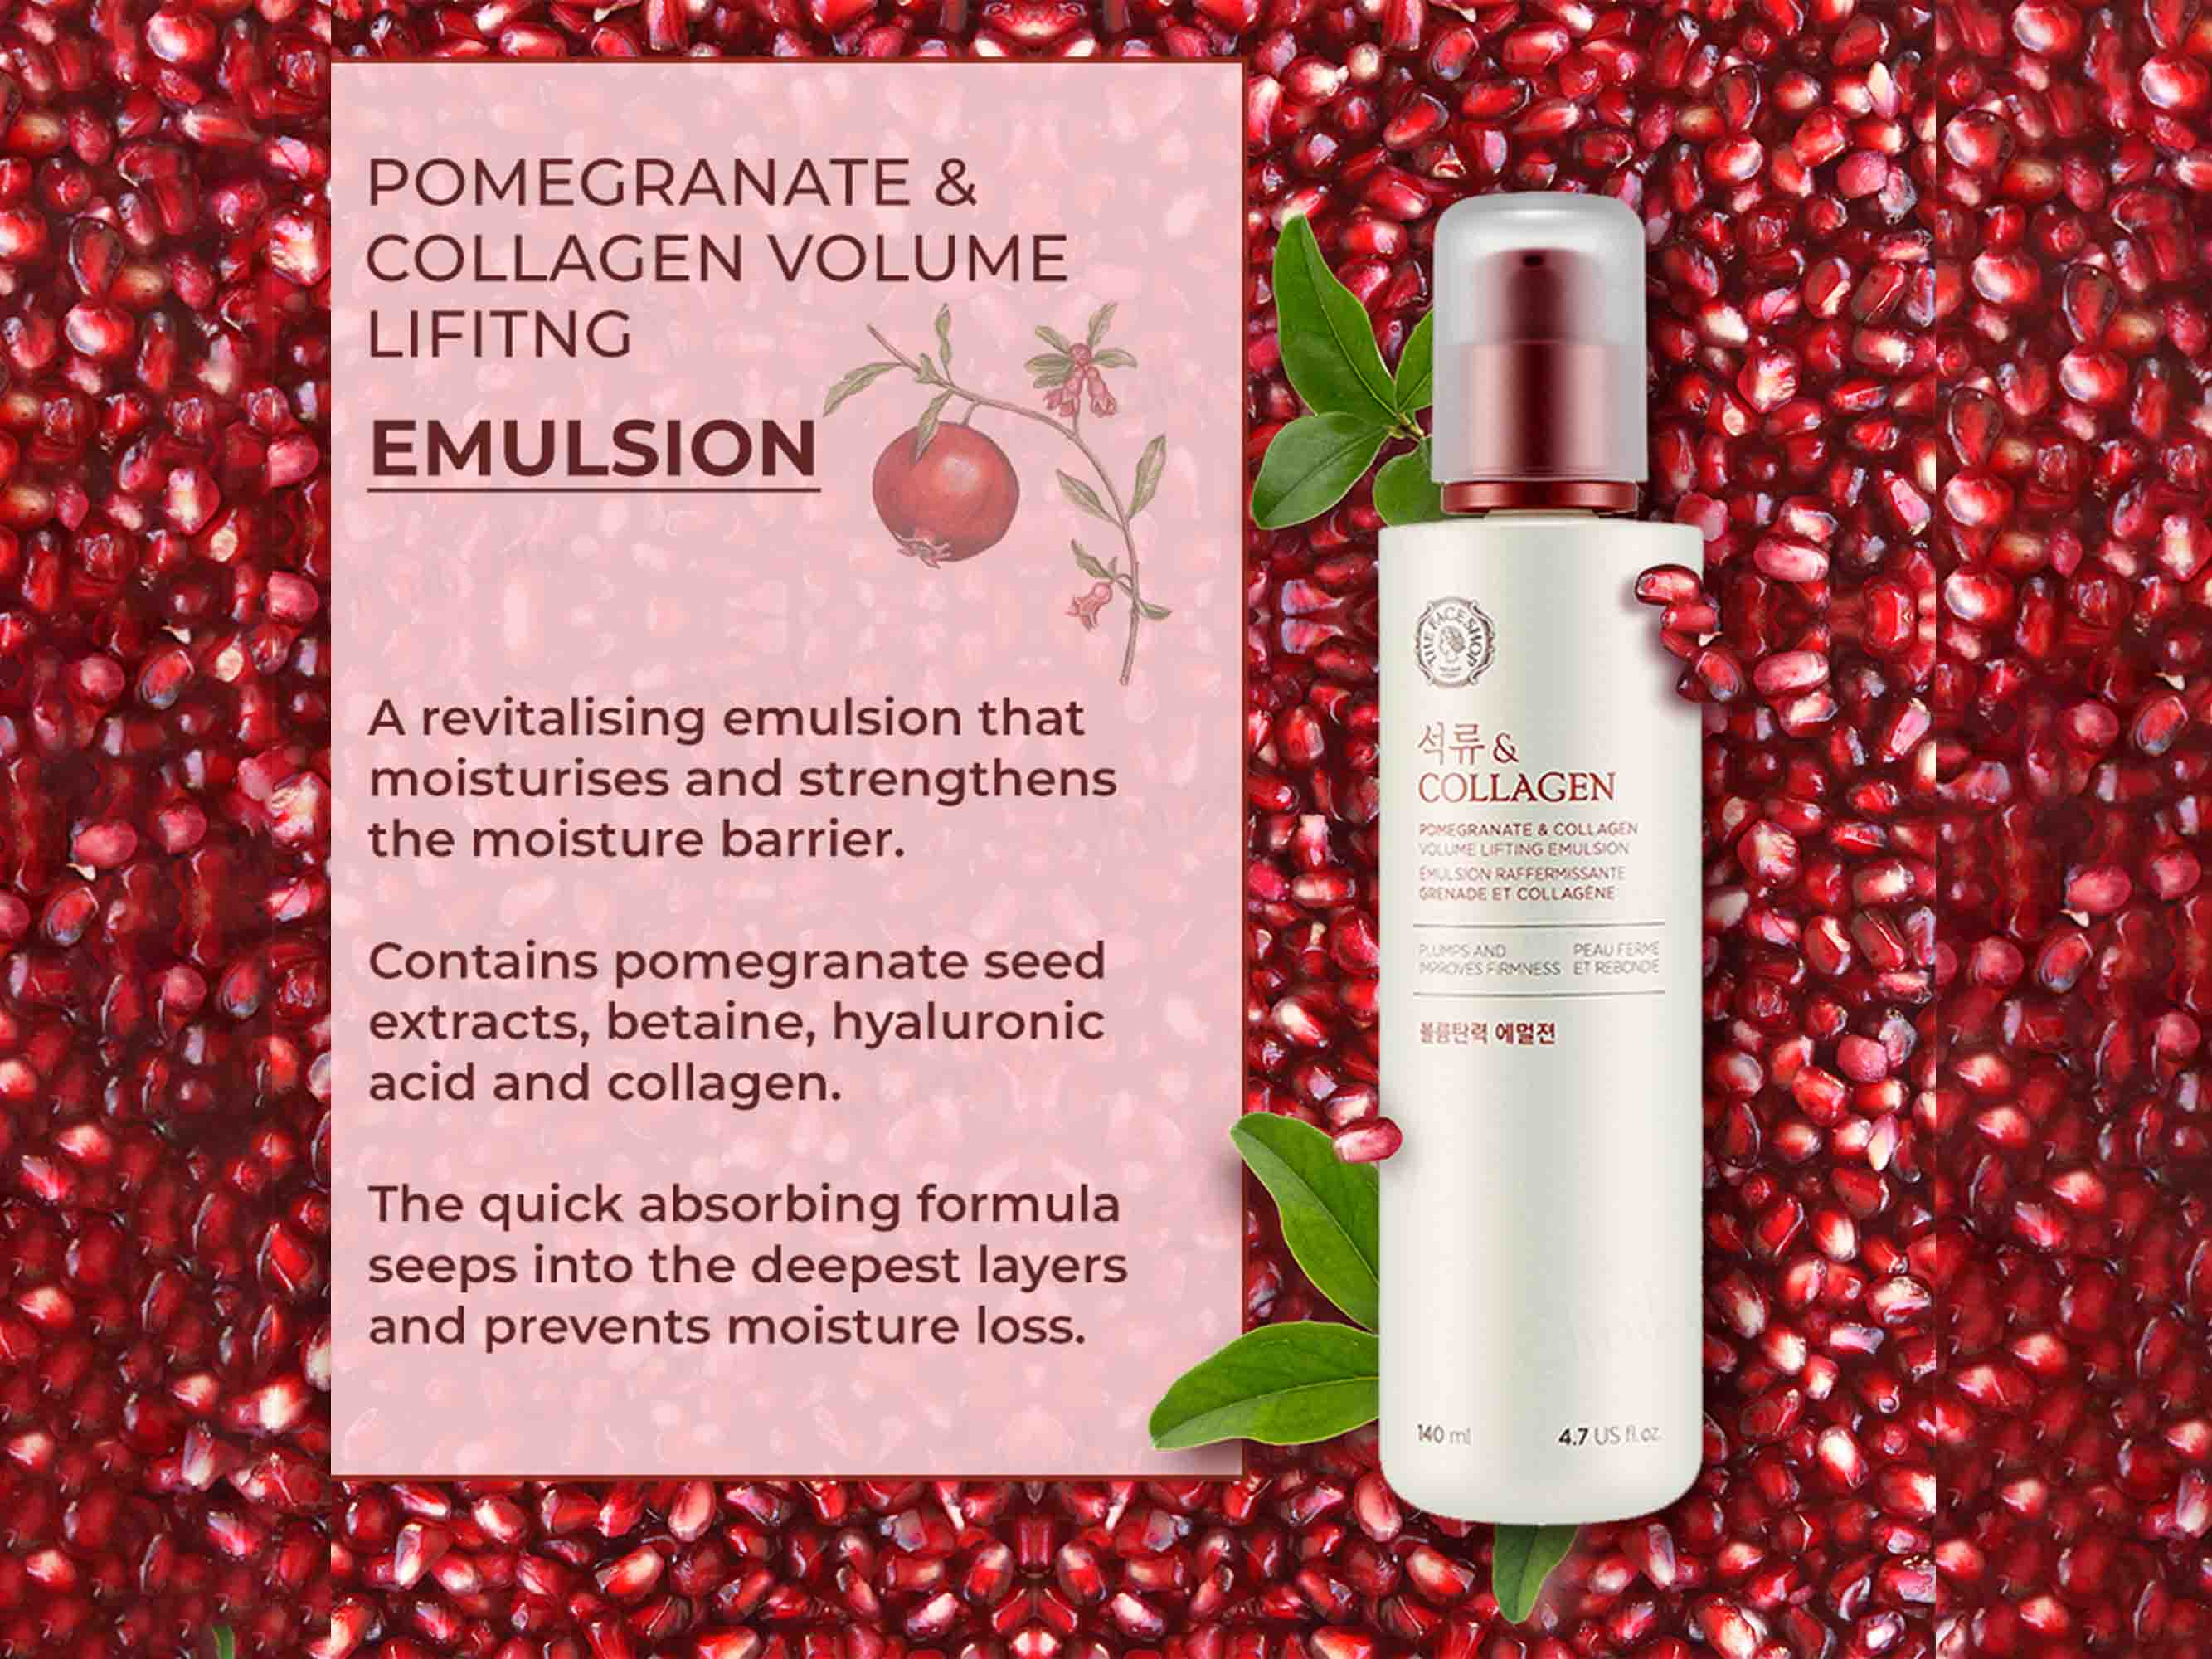 The Face Shop Pomegranate & Collagen Volume Lifting Emulsion